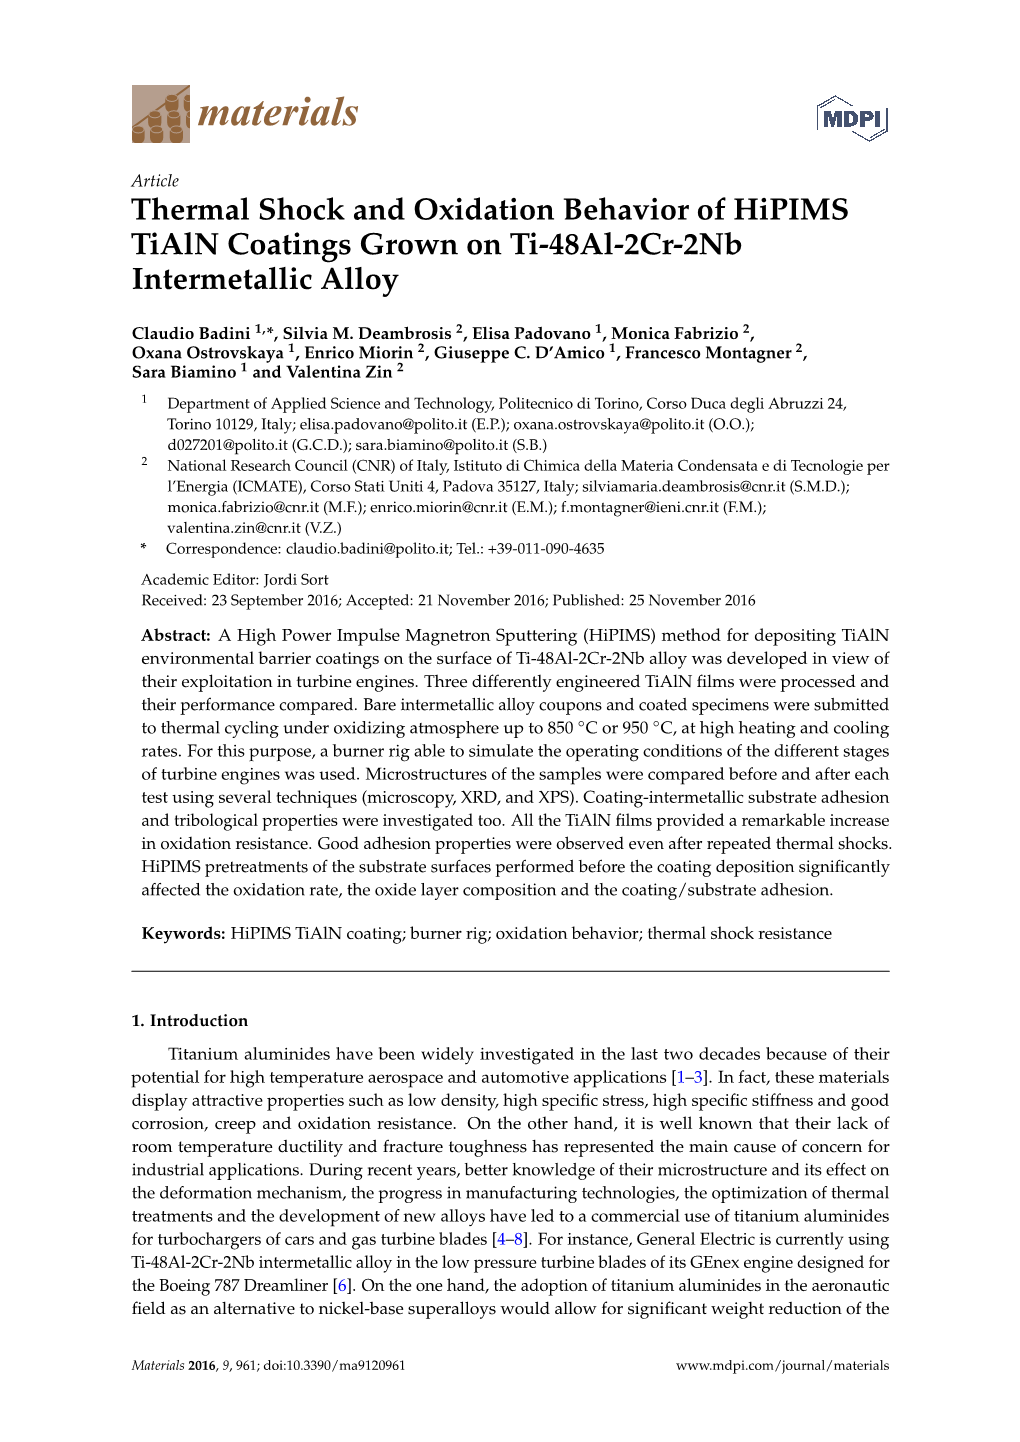 Thermal Shock and Oxidation Behavior of Hipims Tialn Coatings Grown on Ti-48Al-2Cr-2Nb Intermetallic Alloy